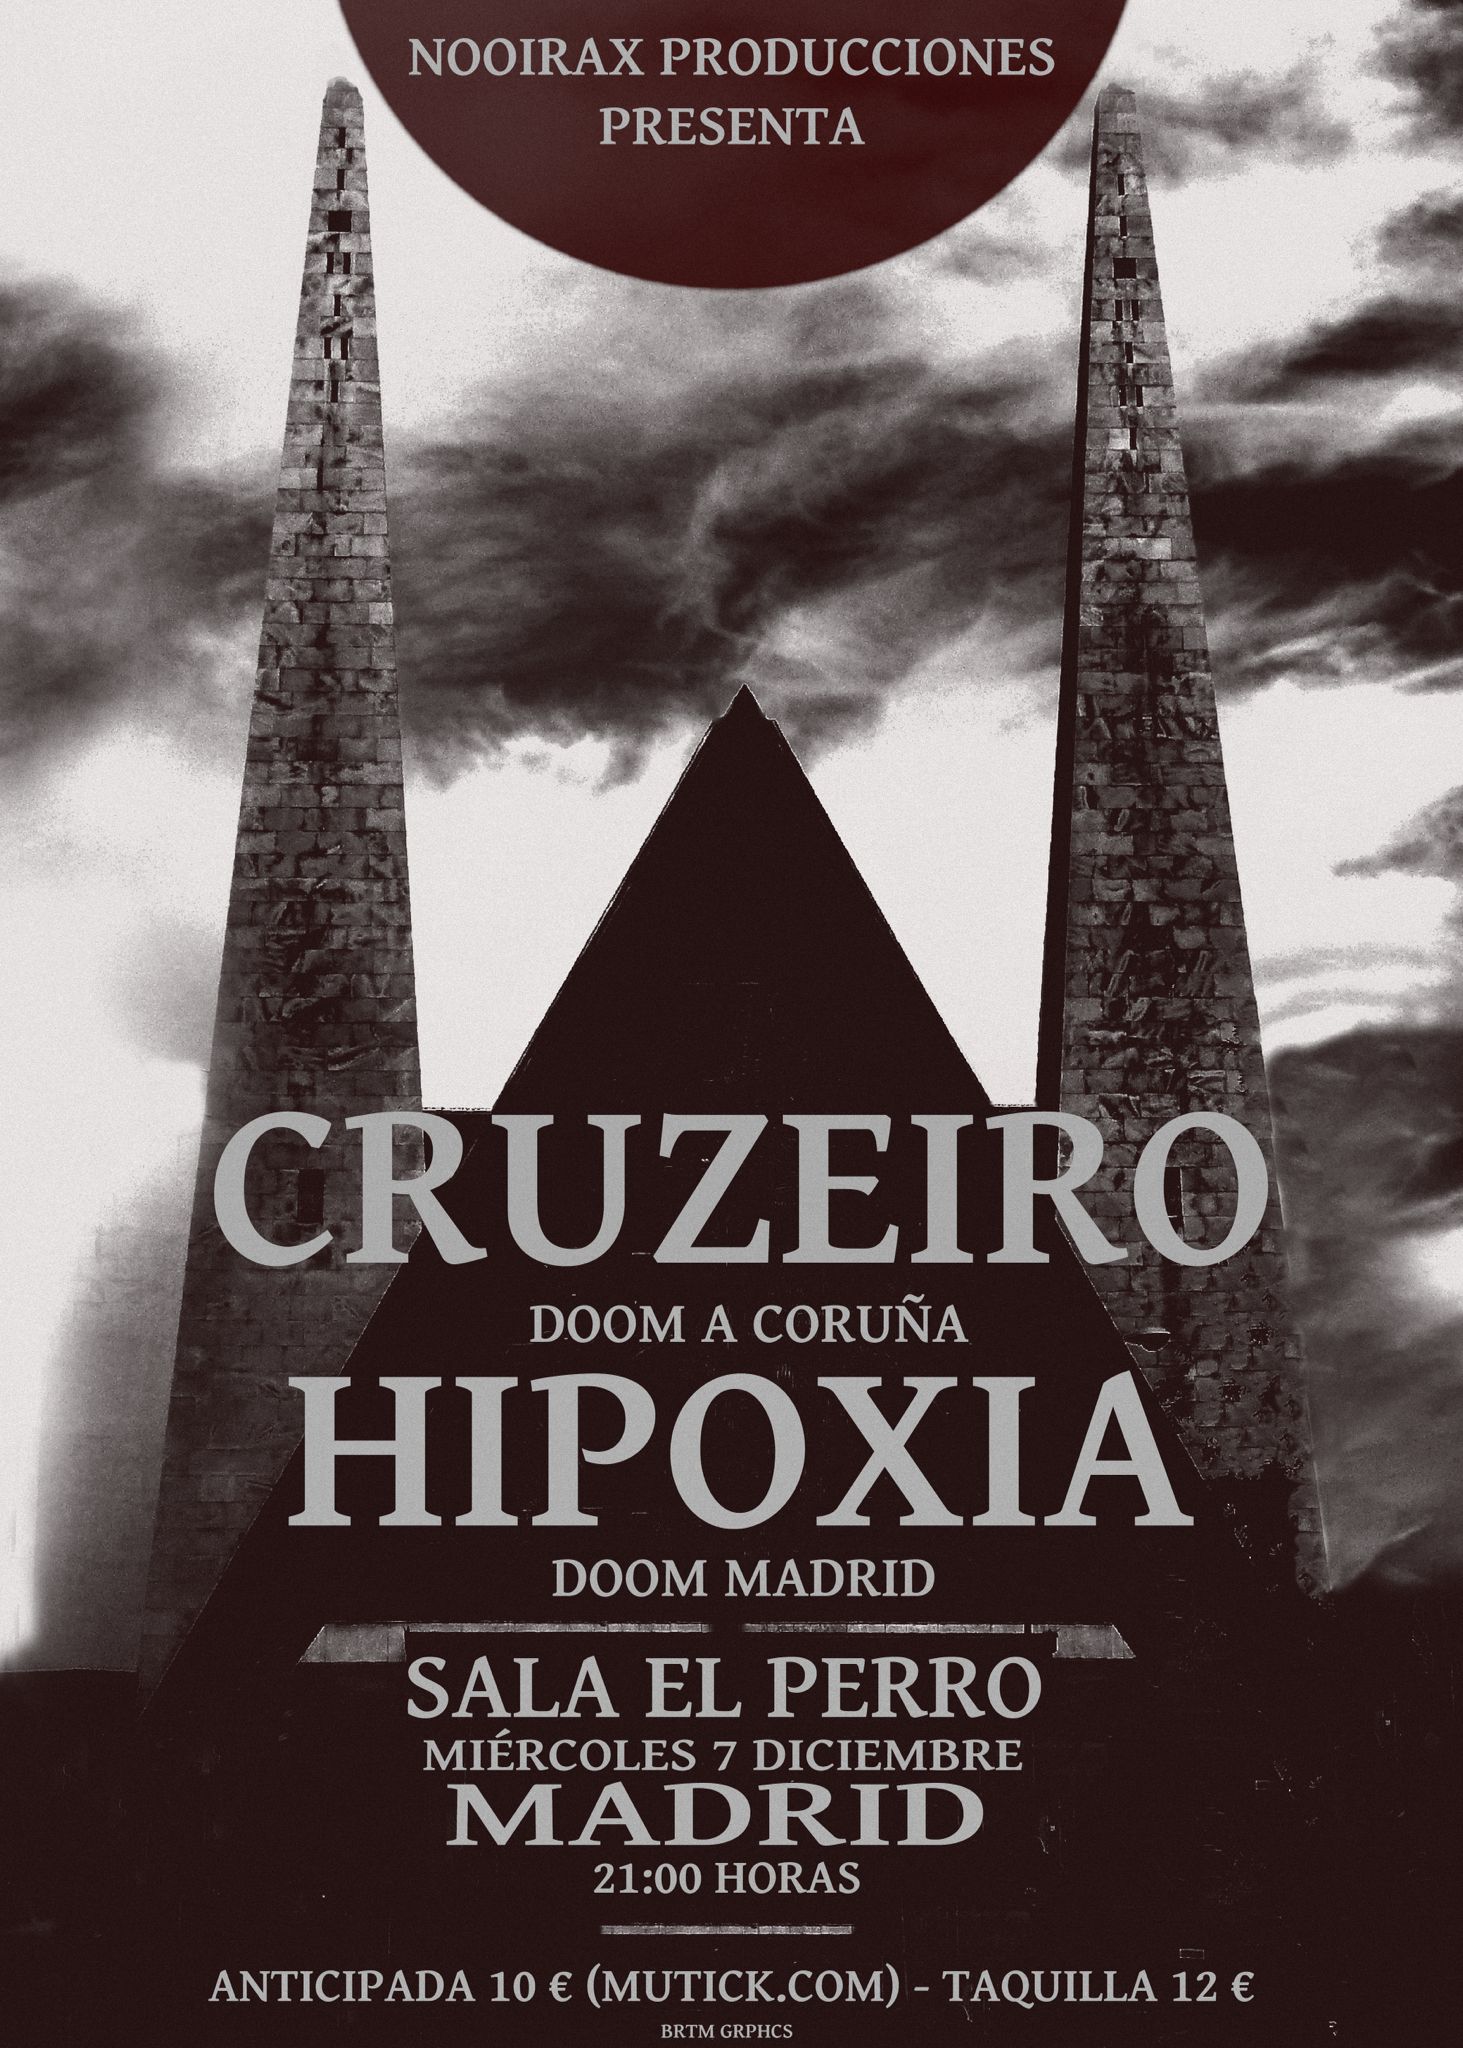 CRUZEIRO (Coruña) + HIPOXIA (Mad) en Madrid  - Mutick